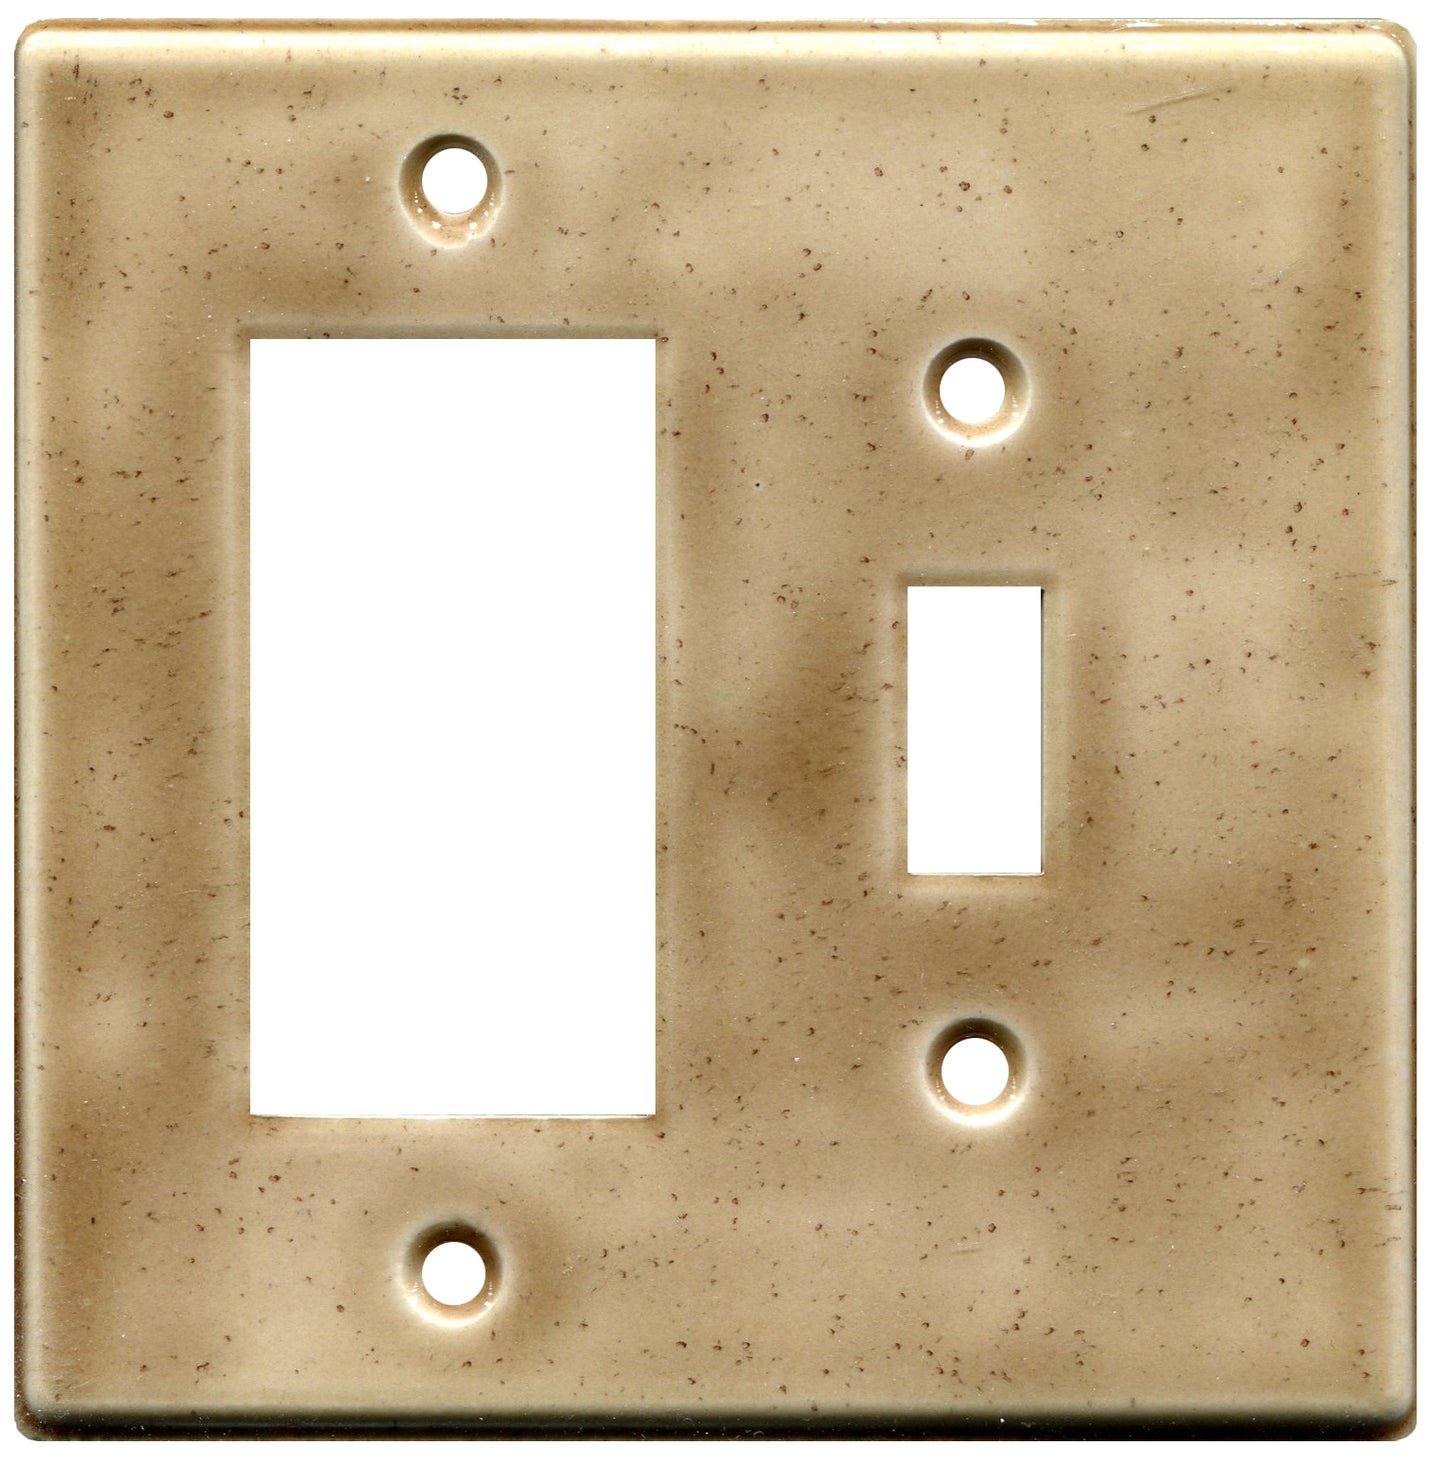 Ash GFI/single switch ceramic switch plate